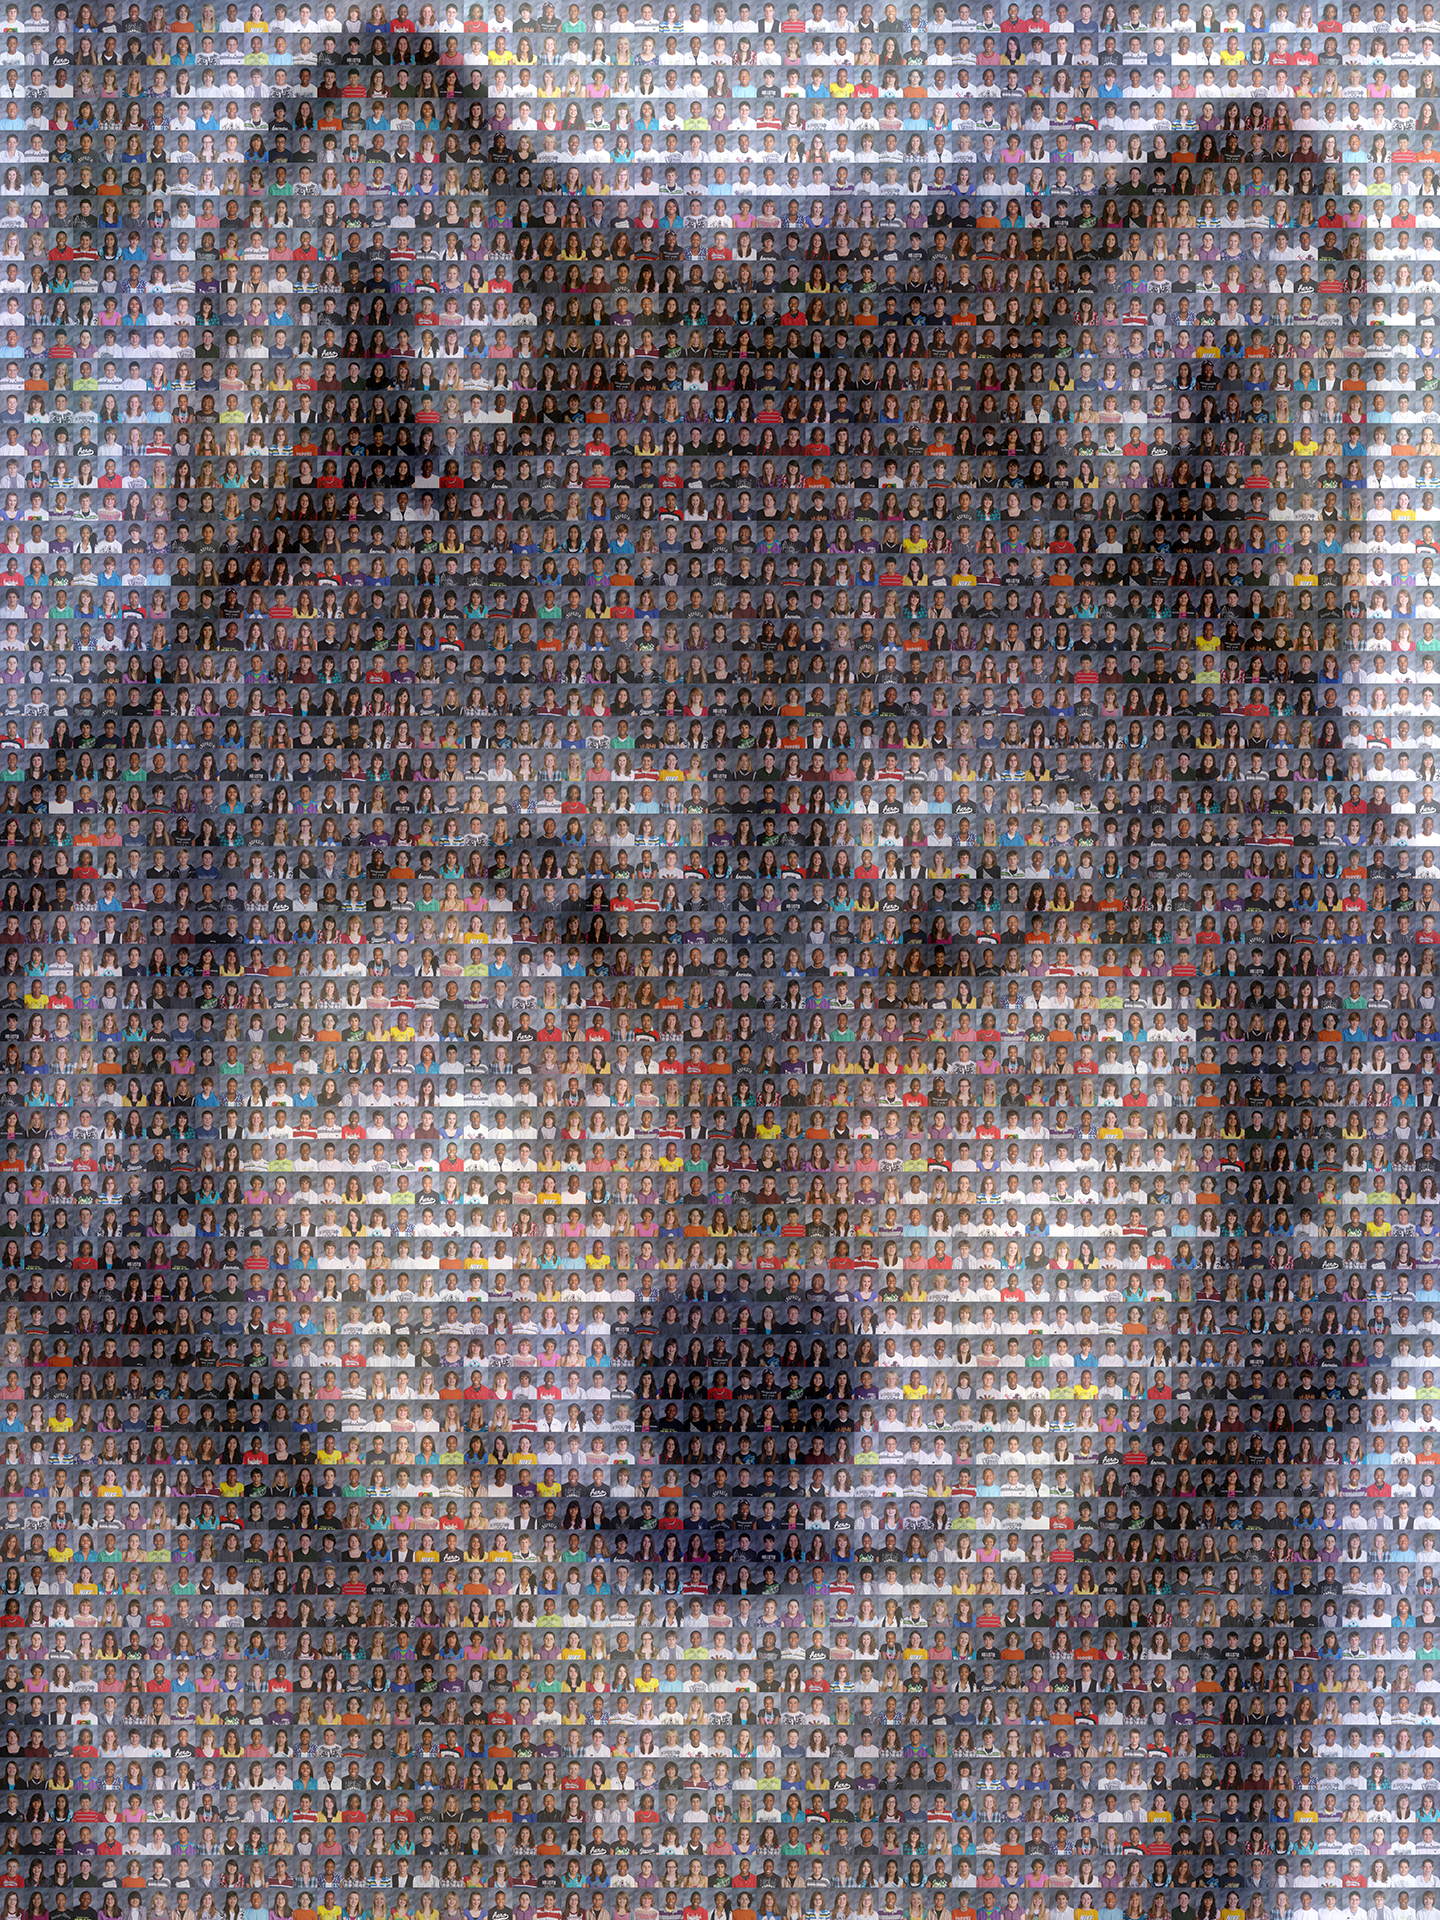 photo mosaic created using 161 student photos